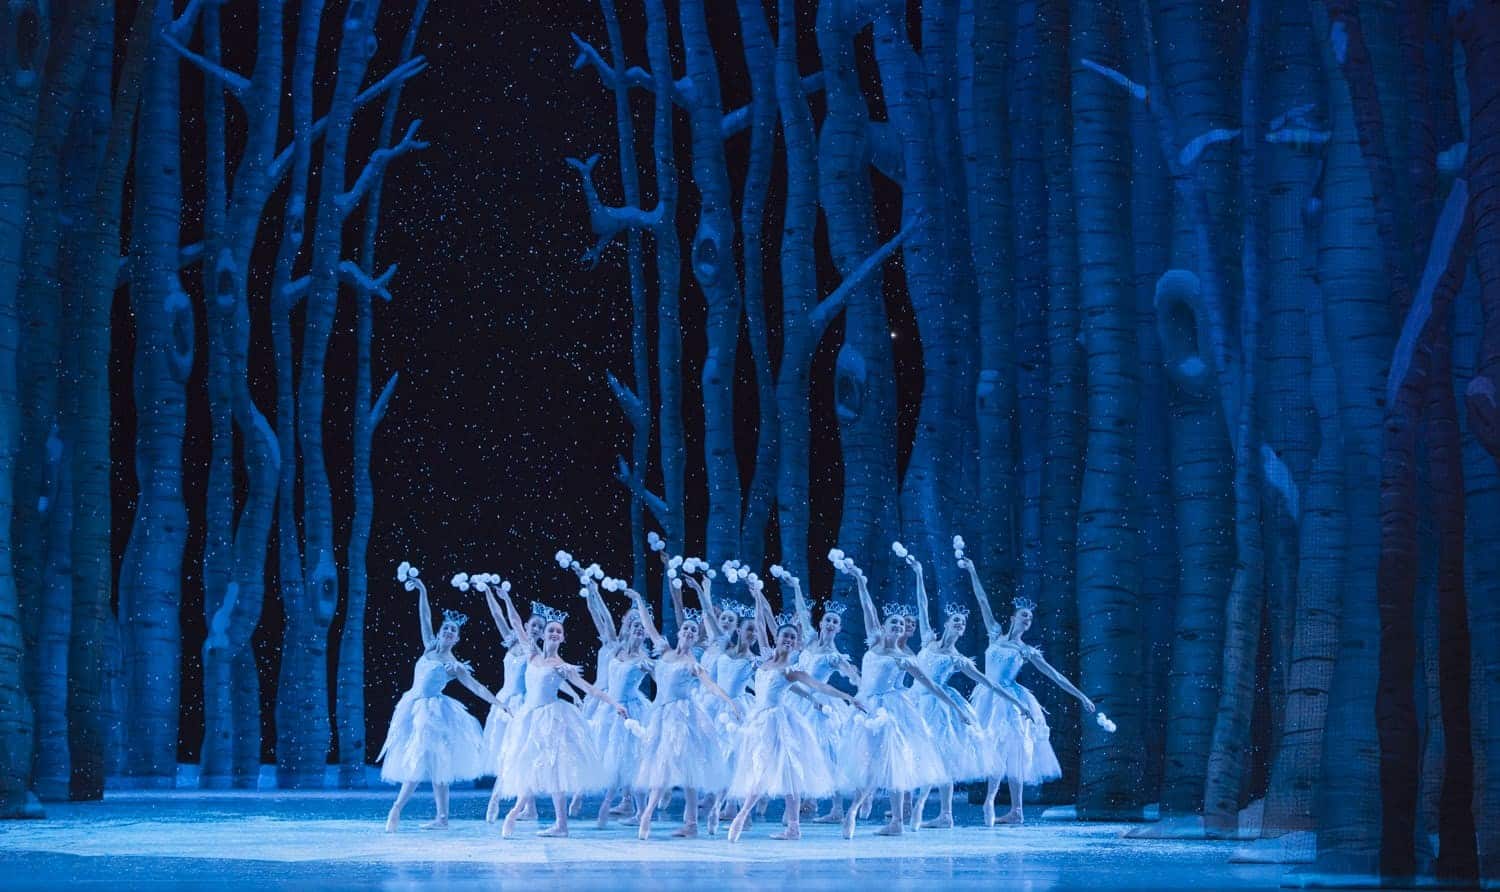 Snow scene. George Balanchine's The Nutcracker®, choreography by George Balanchine © The George Balanchine Trust. Photo © Angela Sterling.